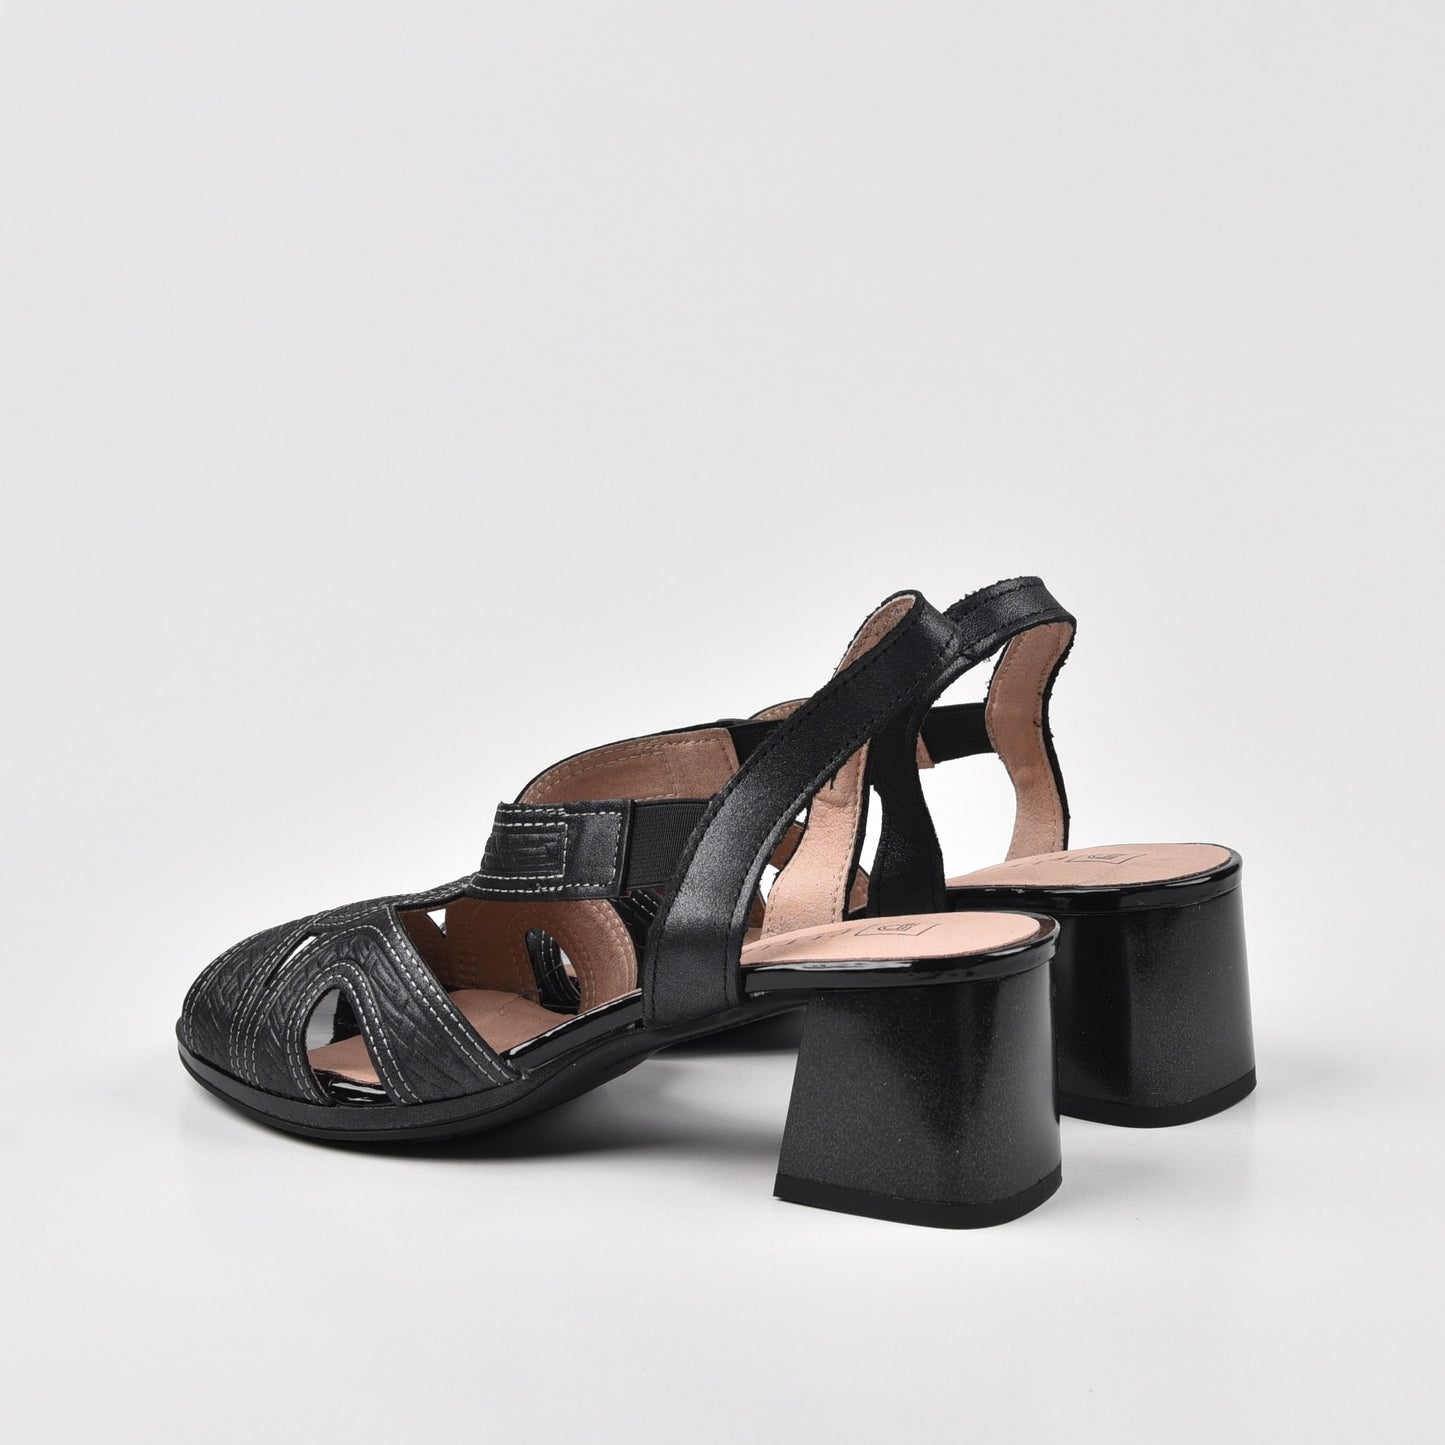 Pitillos Spanish Classic Medium Heel Sandal for Women in Black.